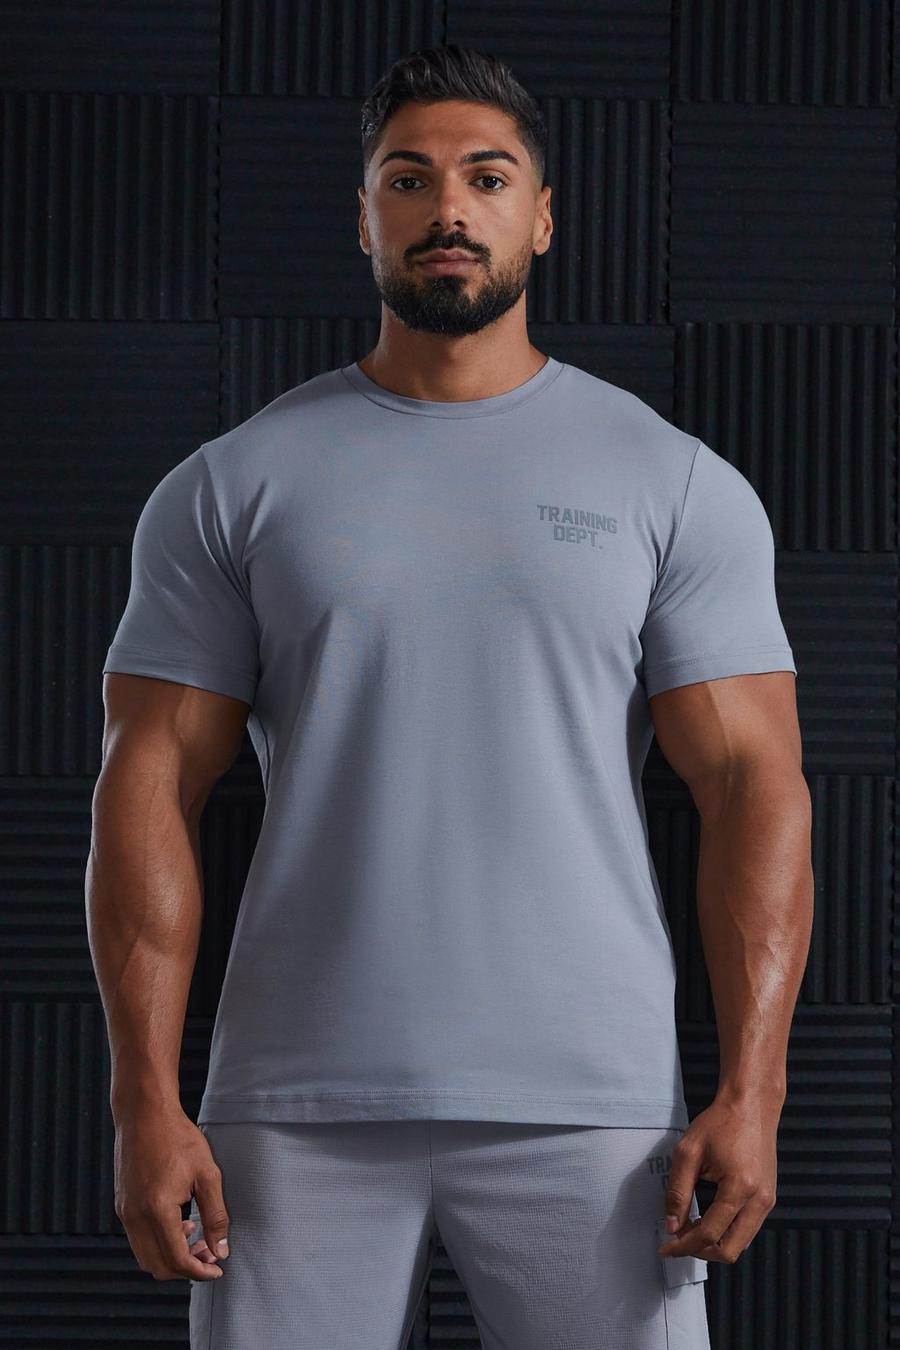 T-shirt Active Training Dept per alta performance, Light grey